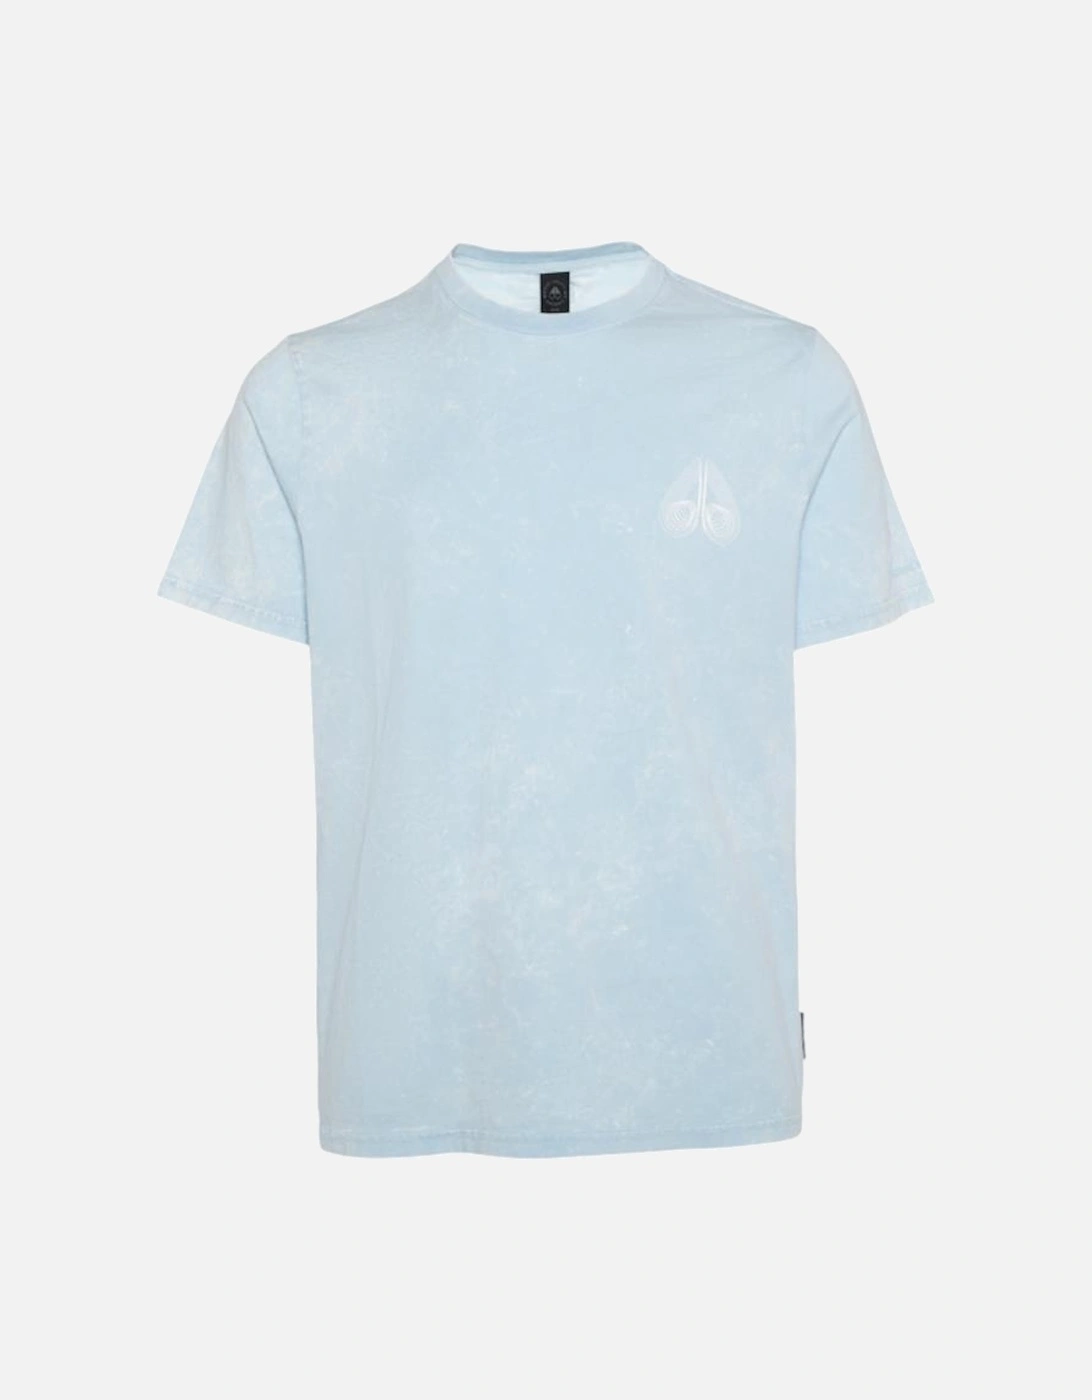 Phillipe T-Shirt 1437 Sky Wash, 2 of 1